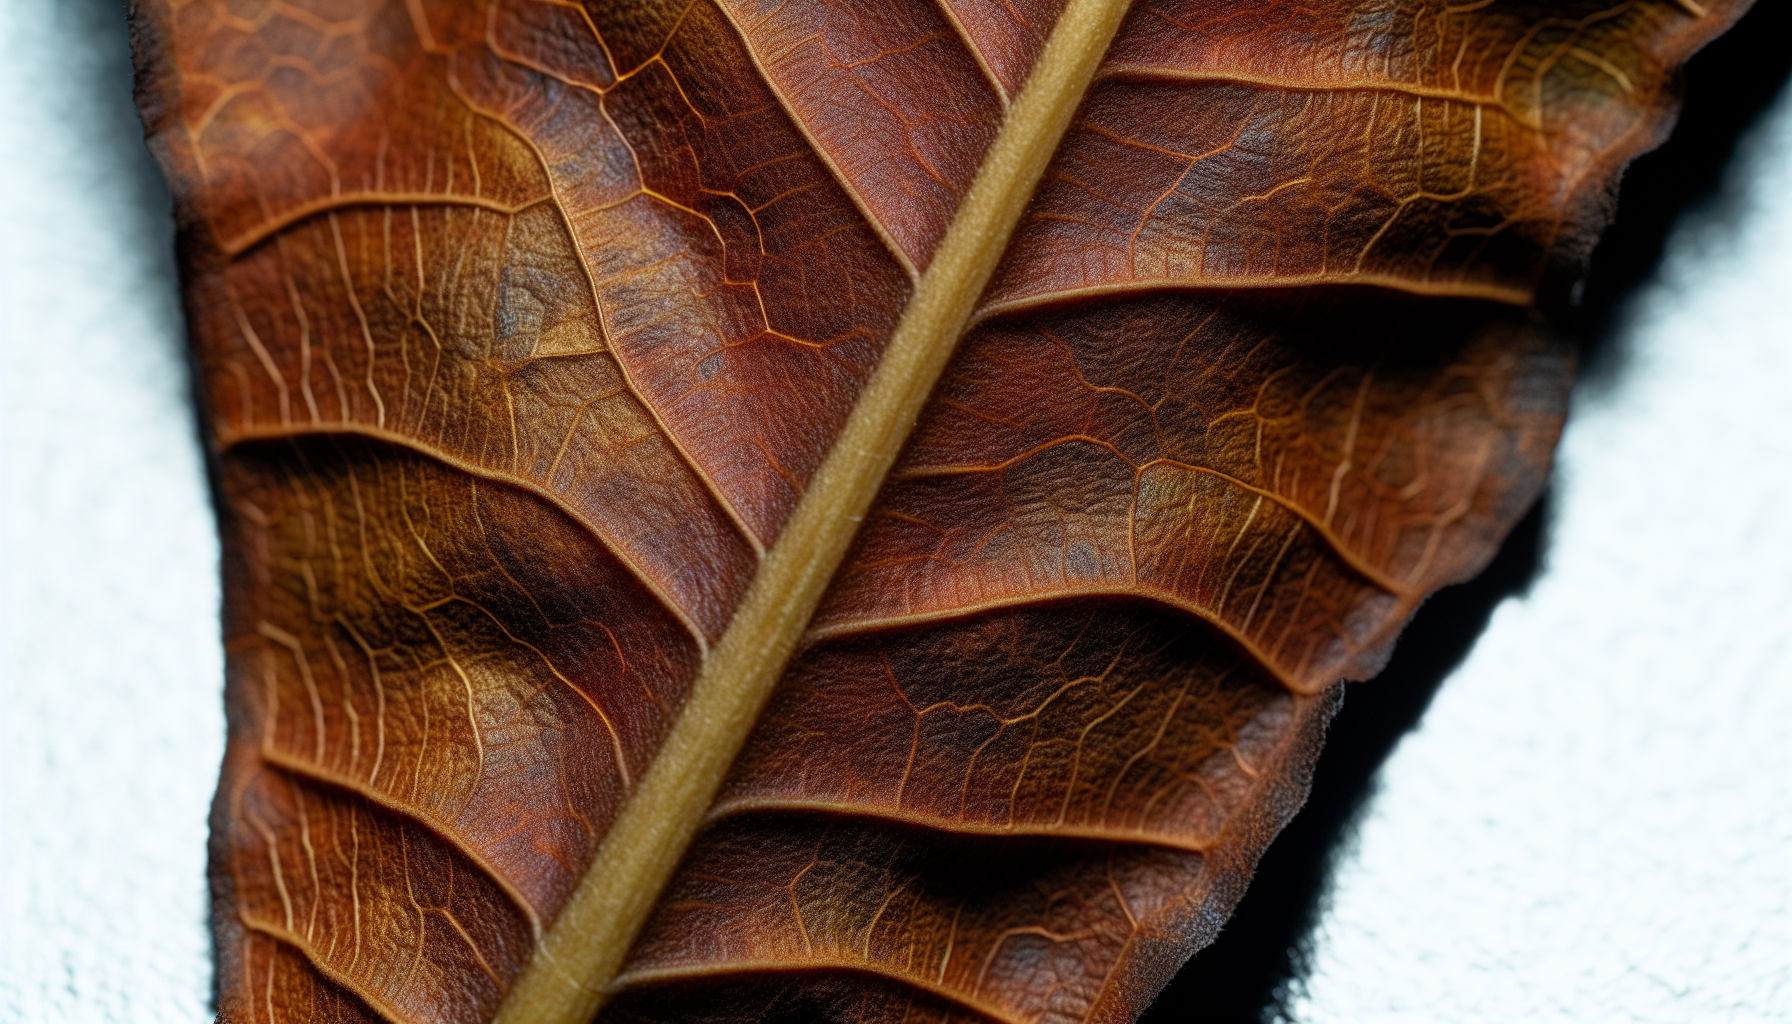 Ecuadorian Sumatra wrapper leaf